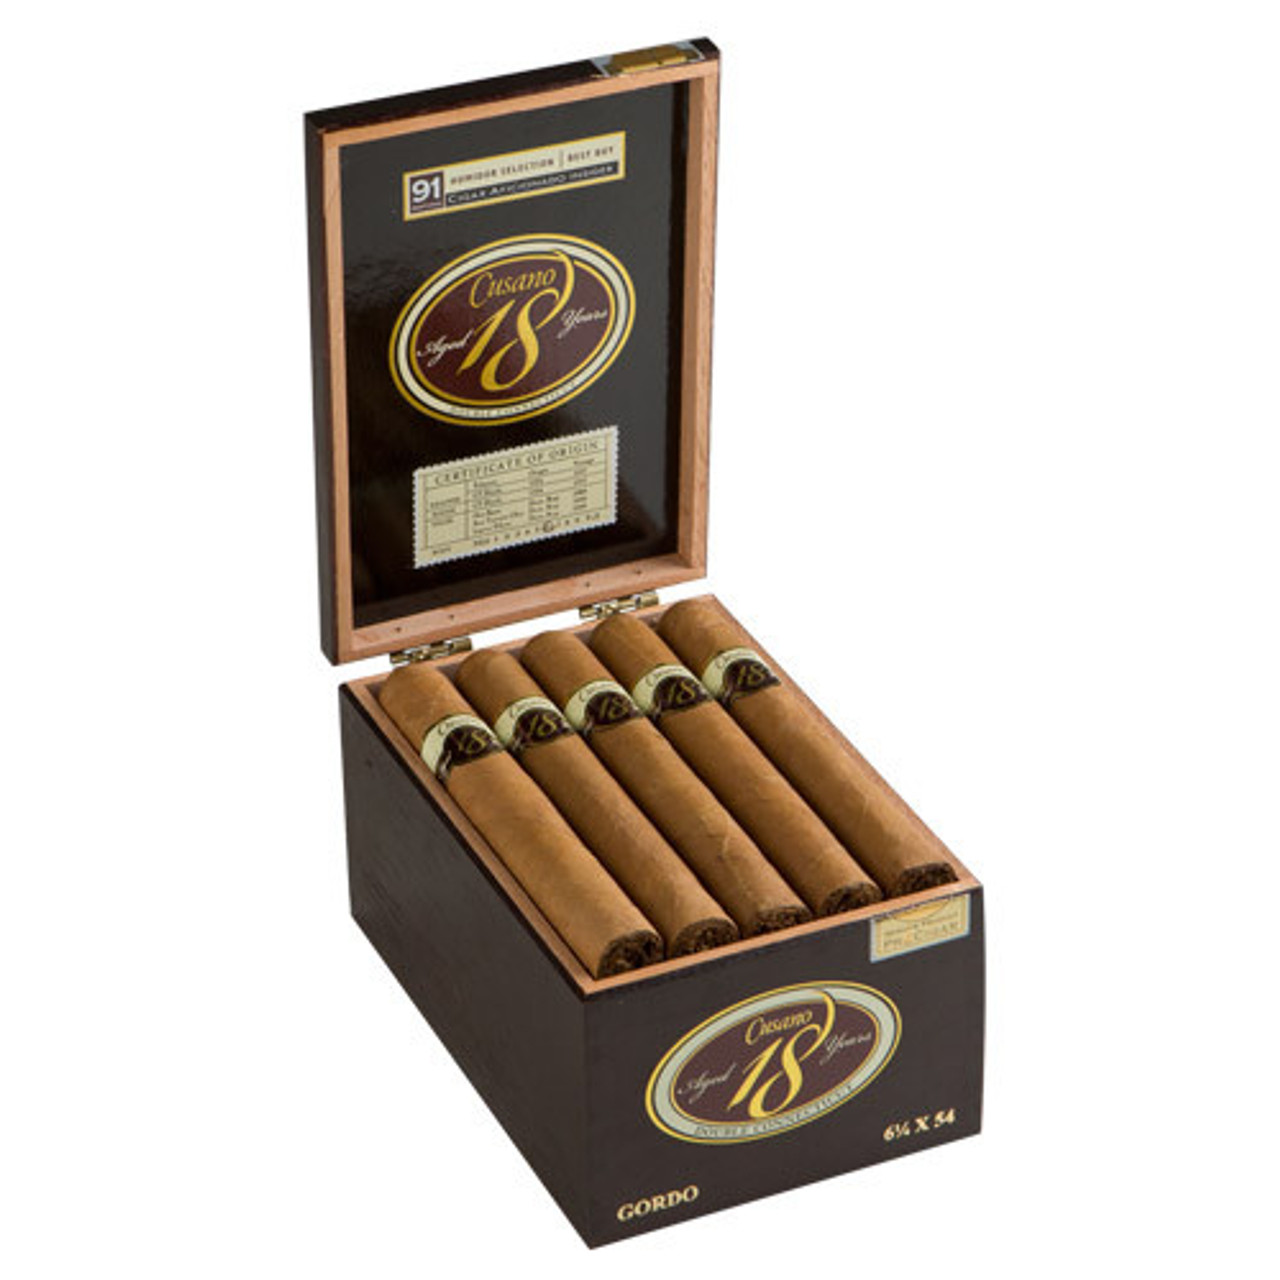 Cusano 18 Double Connecticut Toro Cigars - 6.5 x 46 (Box of 18) Open